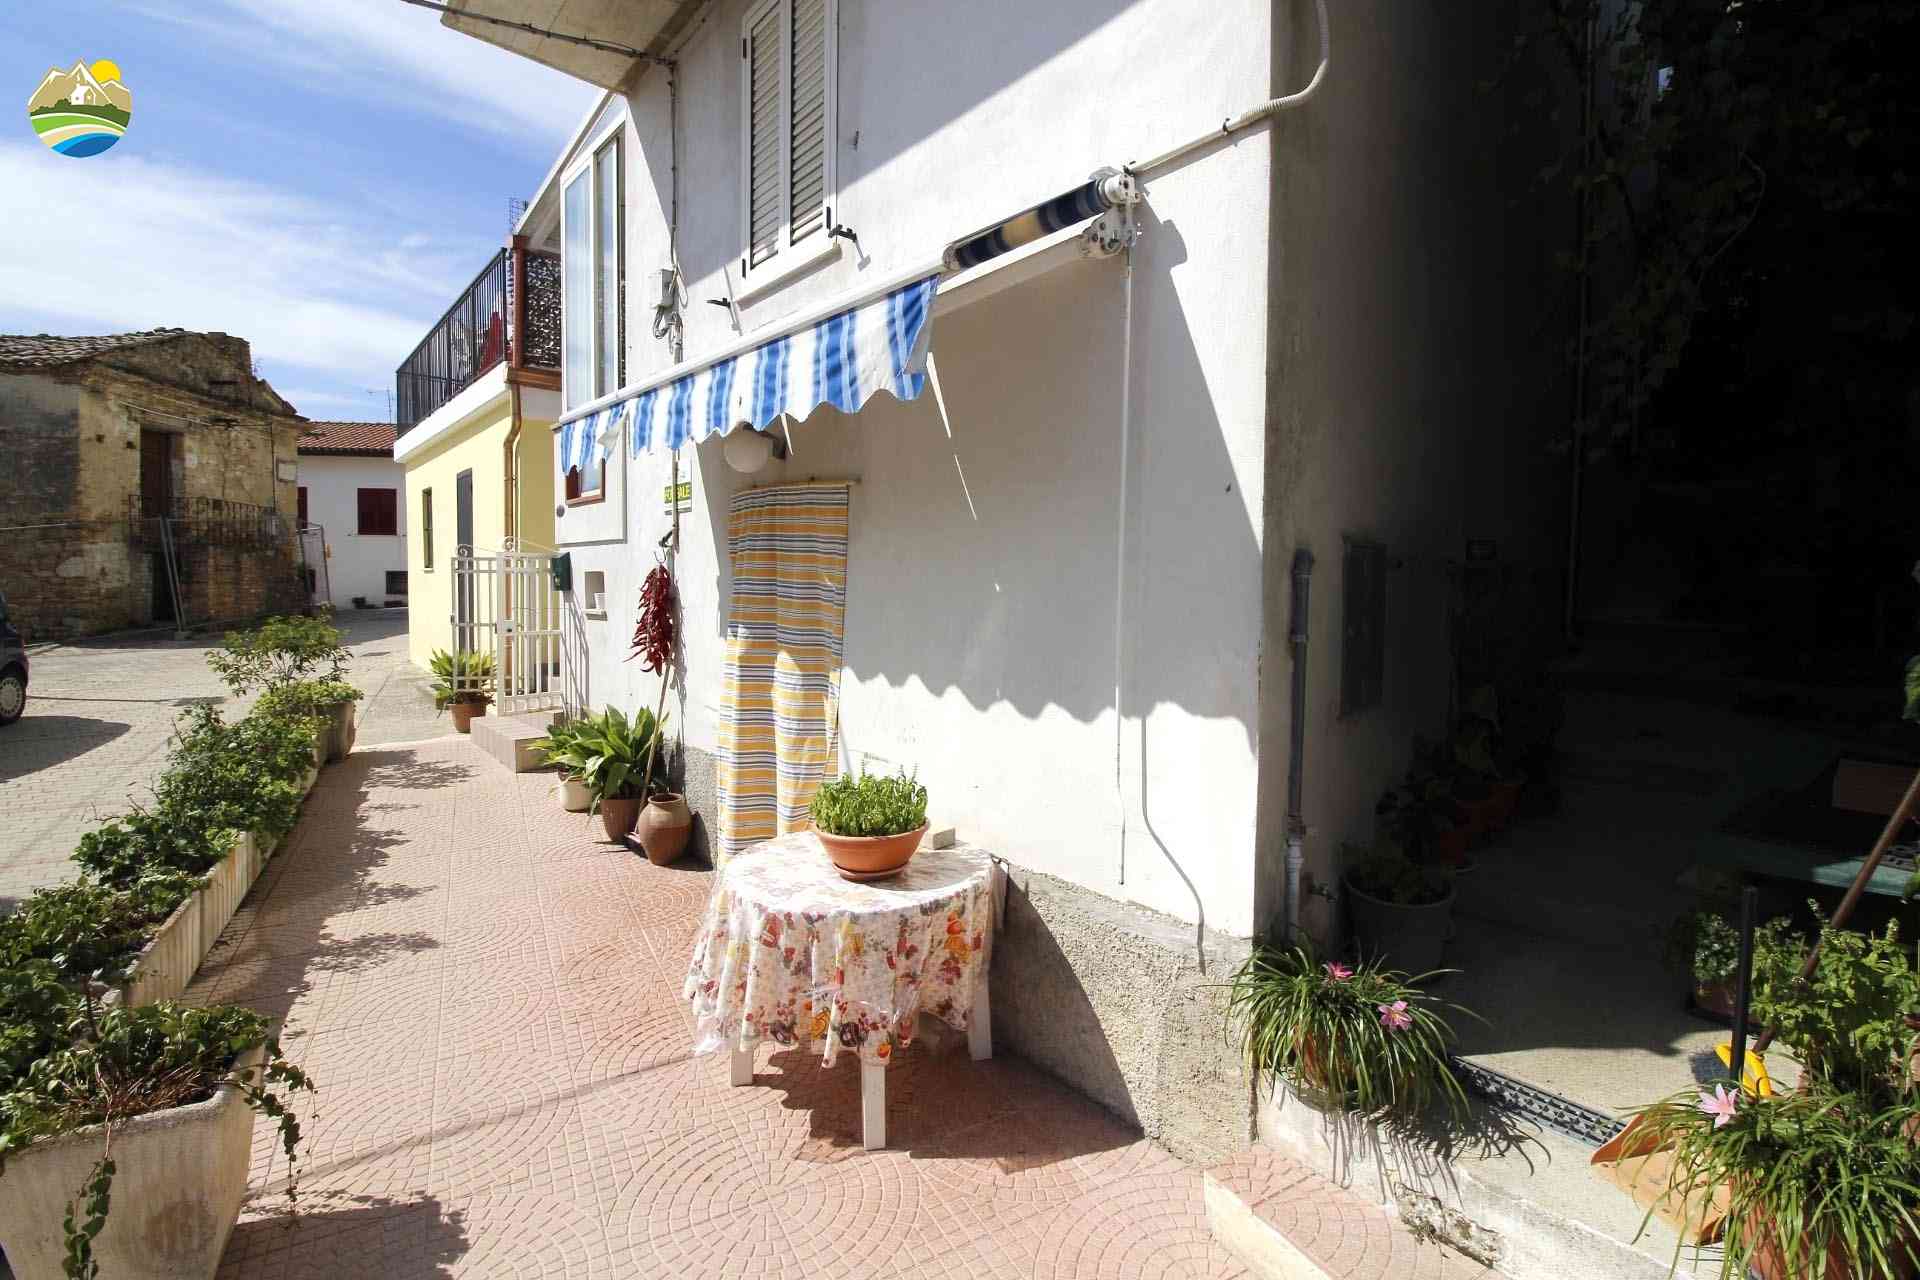 Townhouse Townhouse for sale Montefino (TE), Casa Peperone - Montefino - EUR 62.205 540